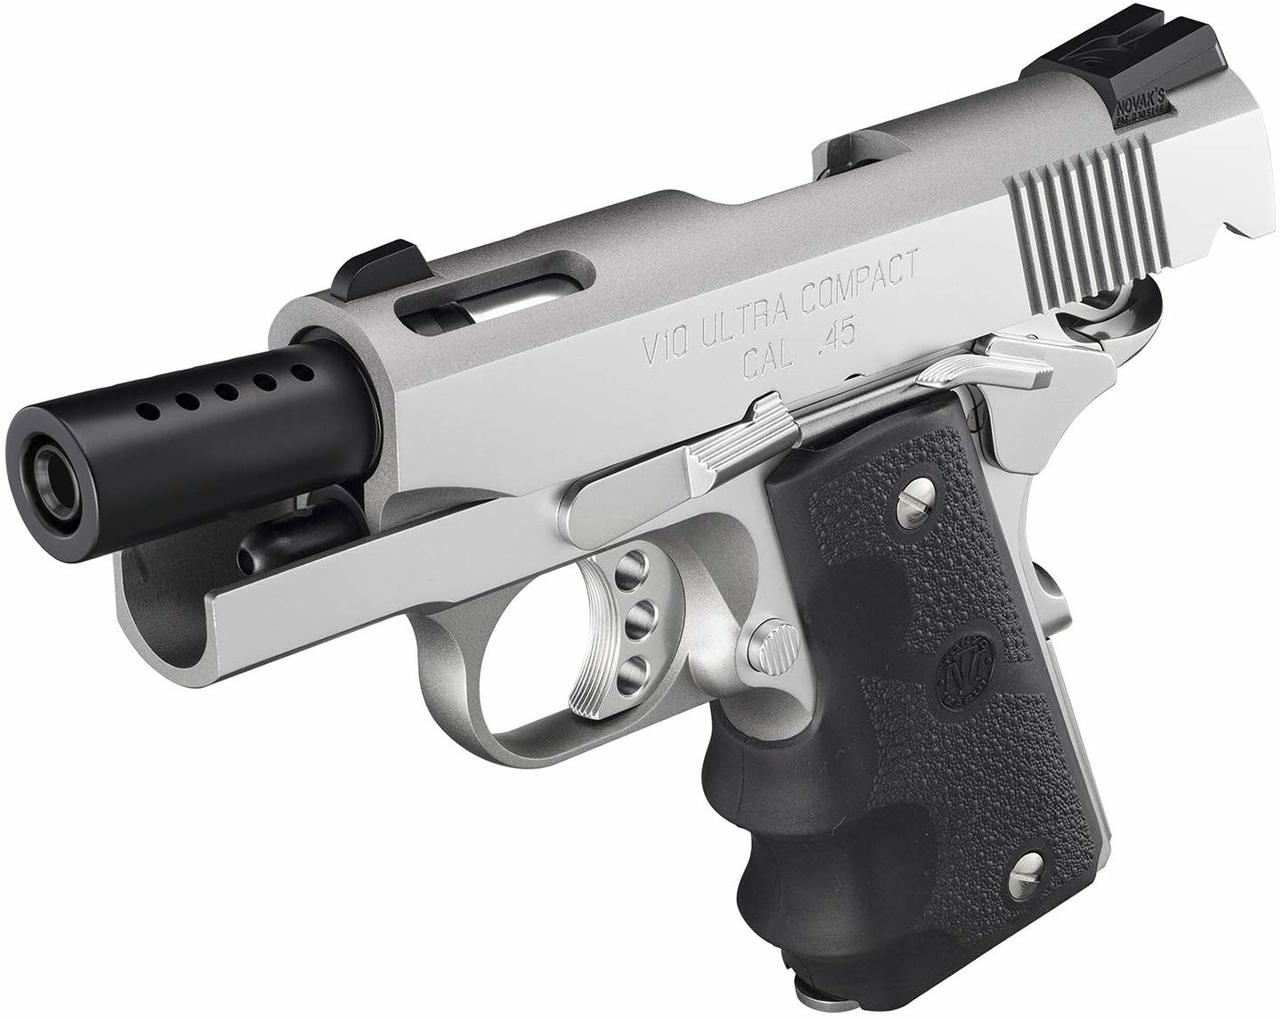 Tokyo Marui TM GBB plynová pistole V10 Ultra Compact - Stříbrná